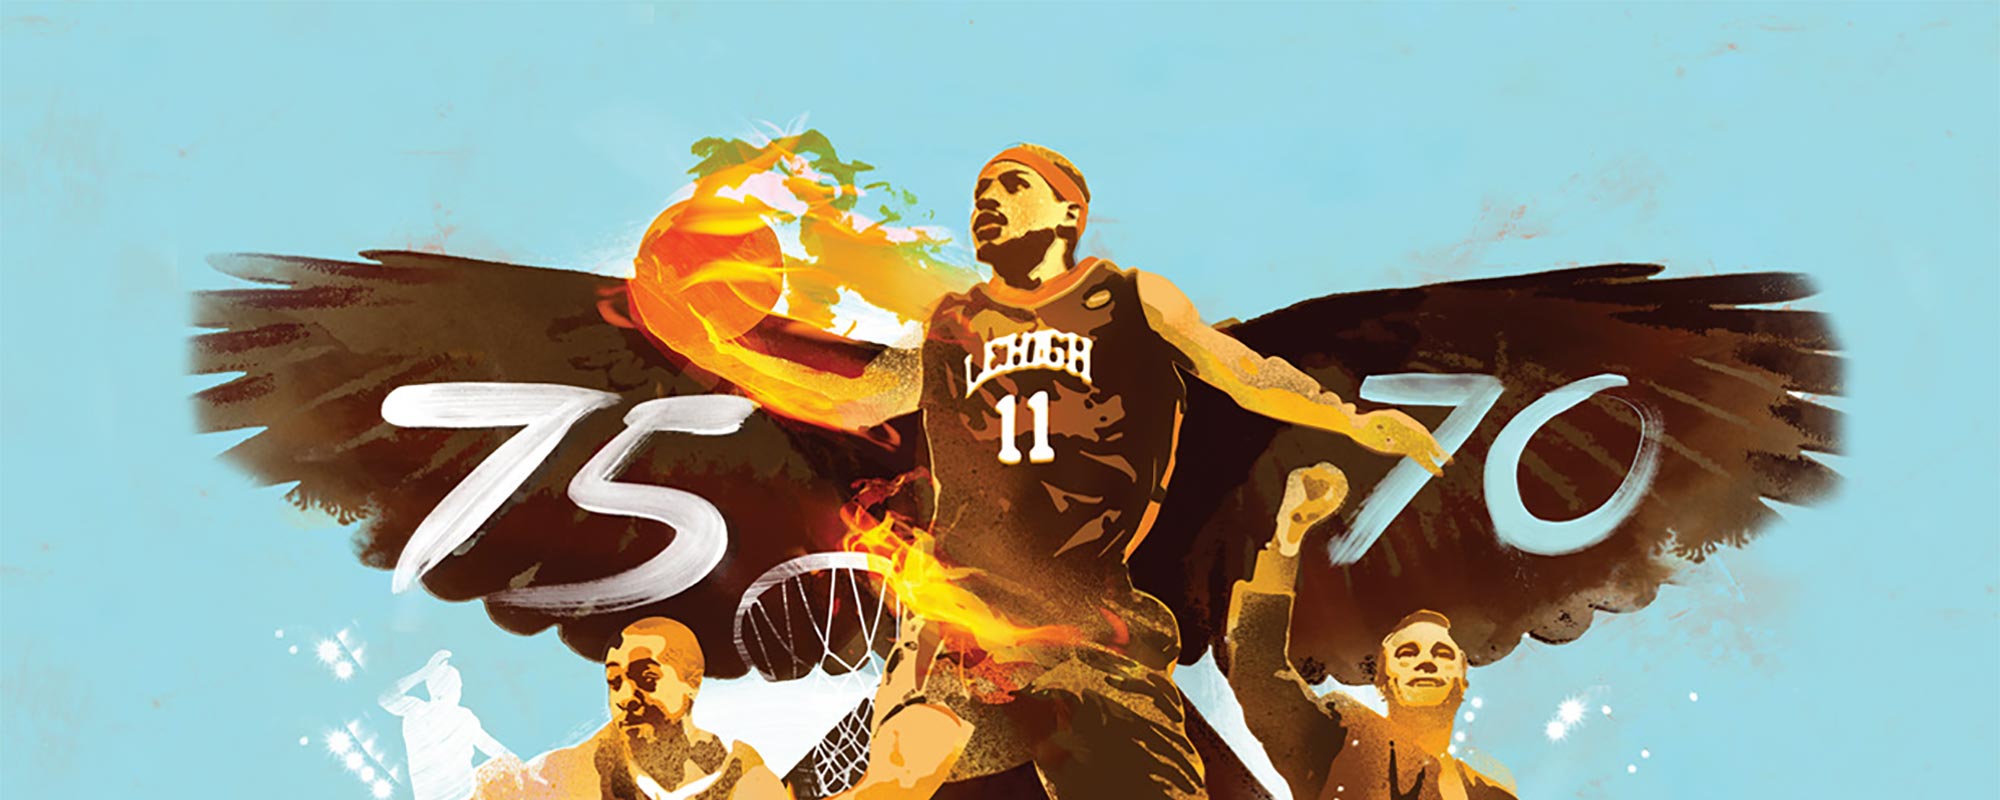 Illustration of Lehigh Basketball team